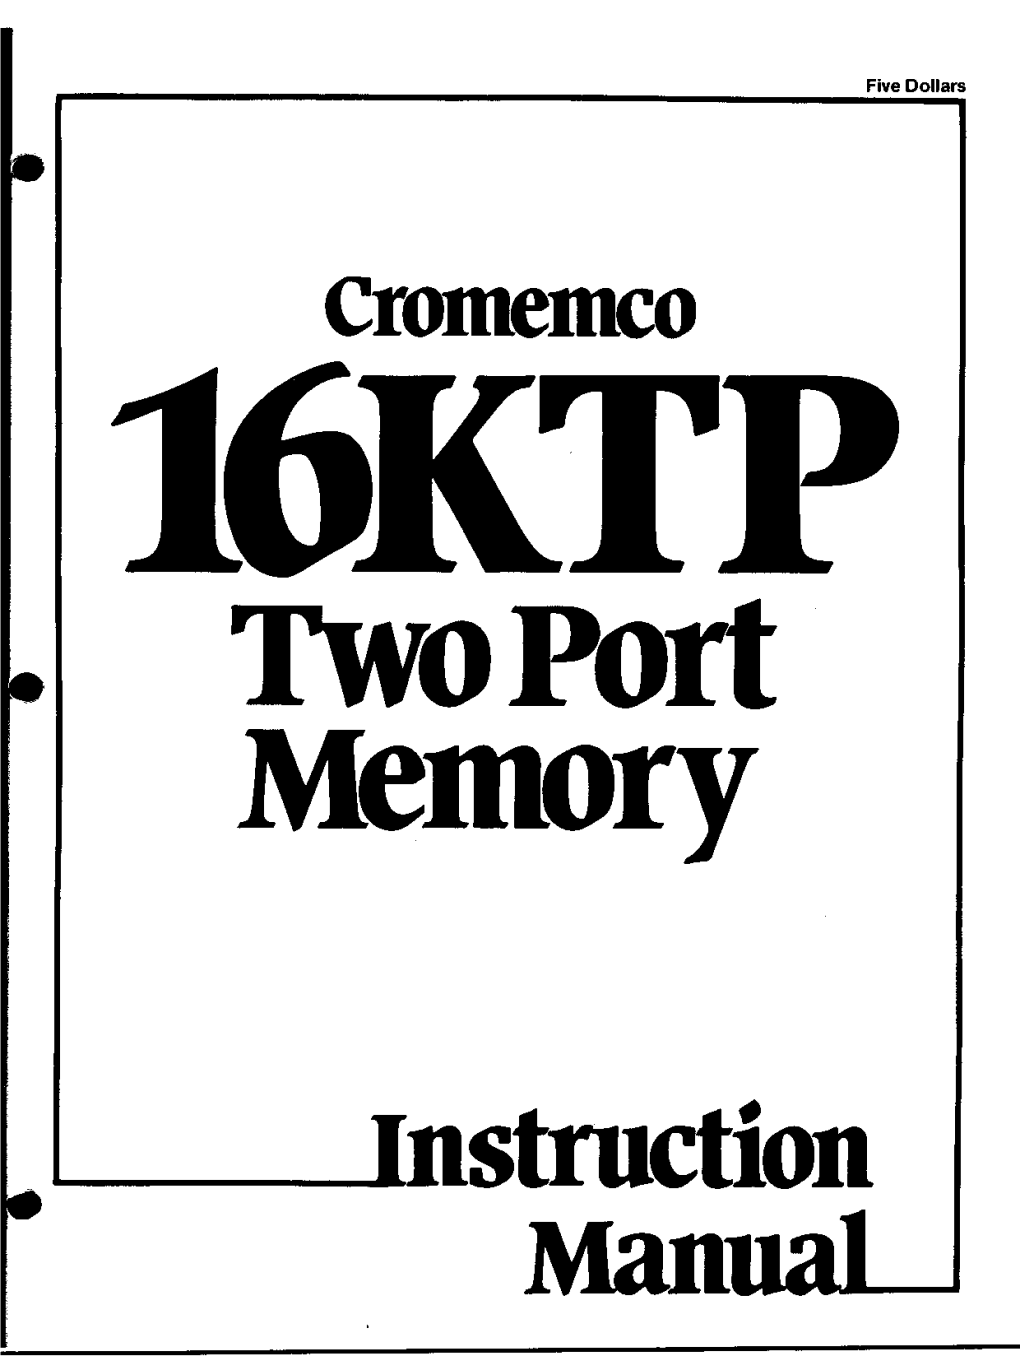 Cromemco 16KTP Two Port Memory Instruction Manual 023-2003 198204